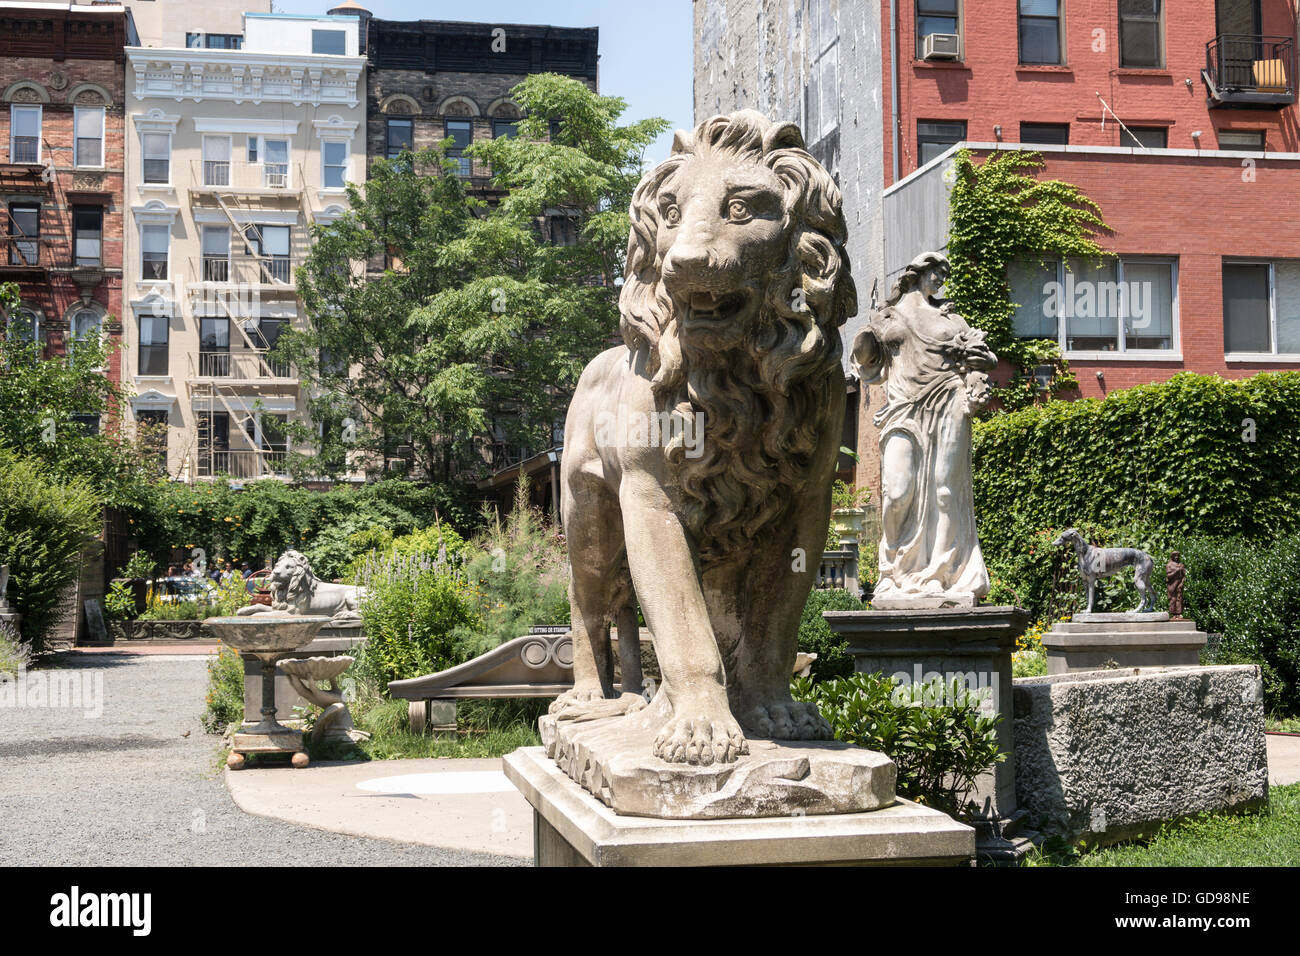 Decorative Statuary in Elizabeth Street Sculpture Garden, NYC Stock Photo